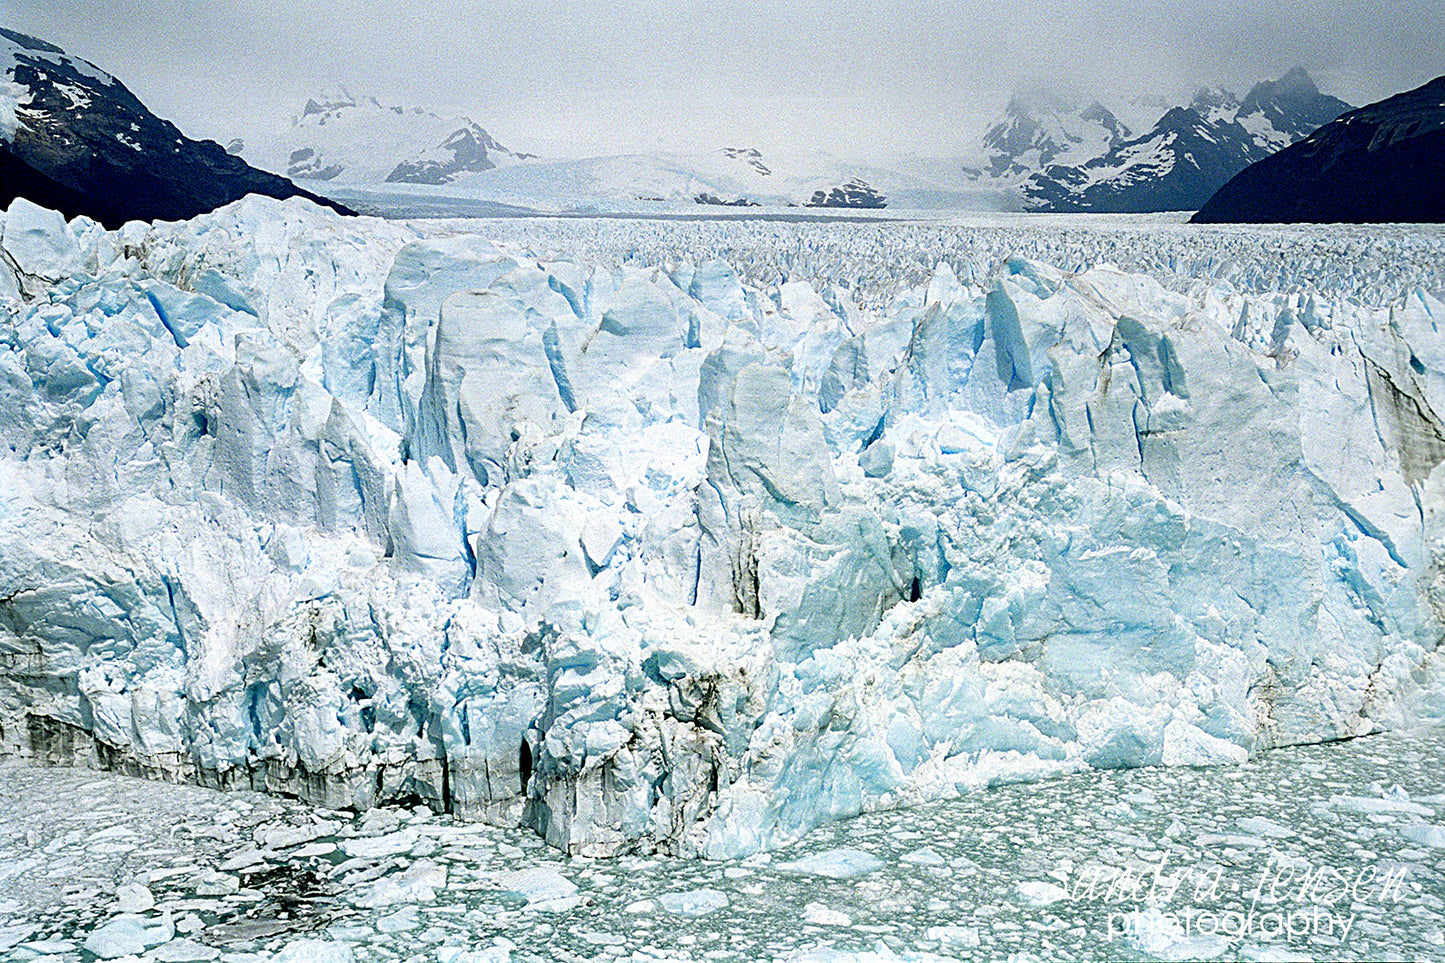 Print - Argentina Patagonia "Upsala Glacier"